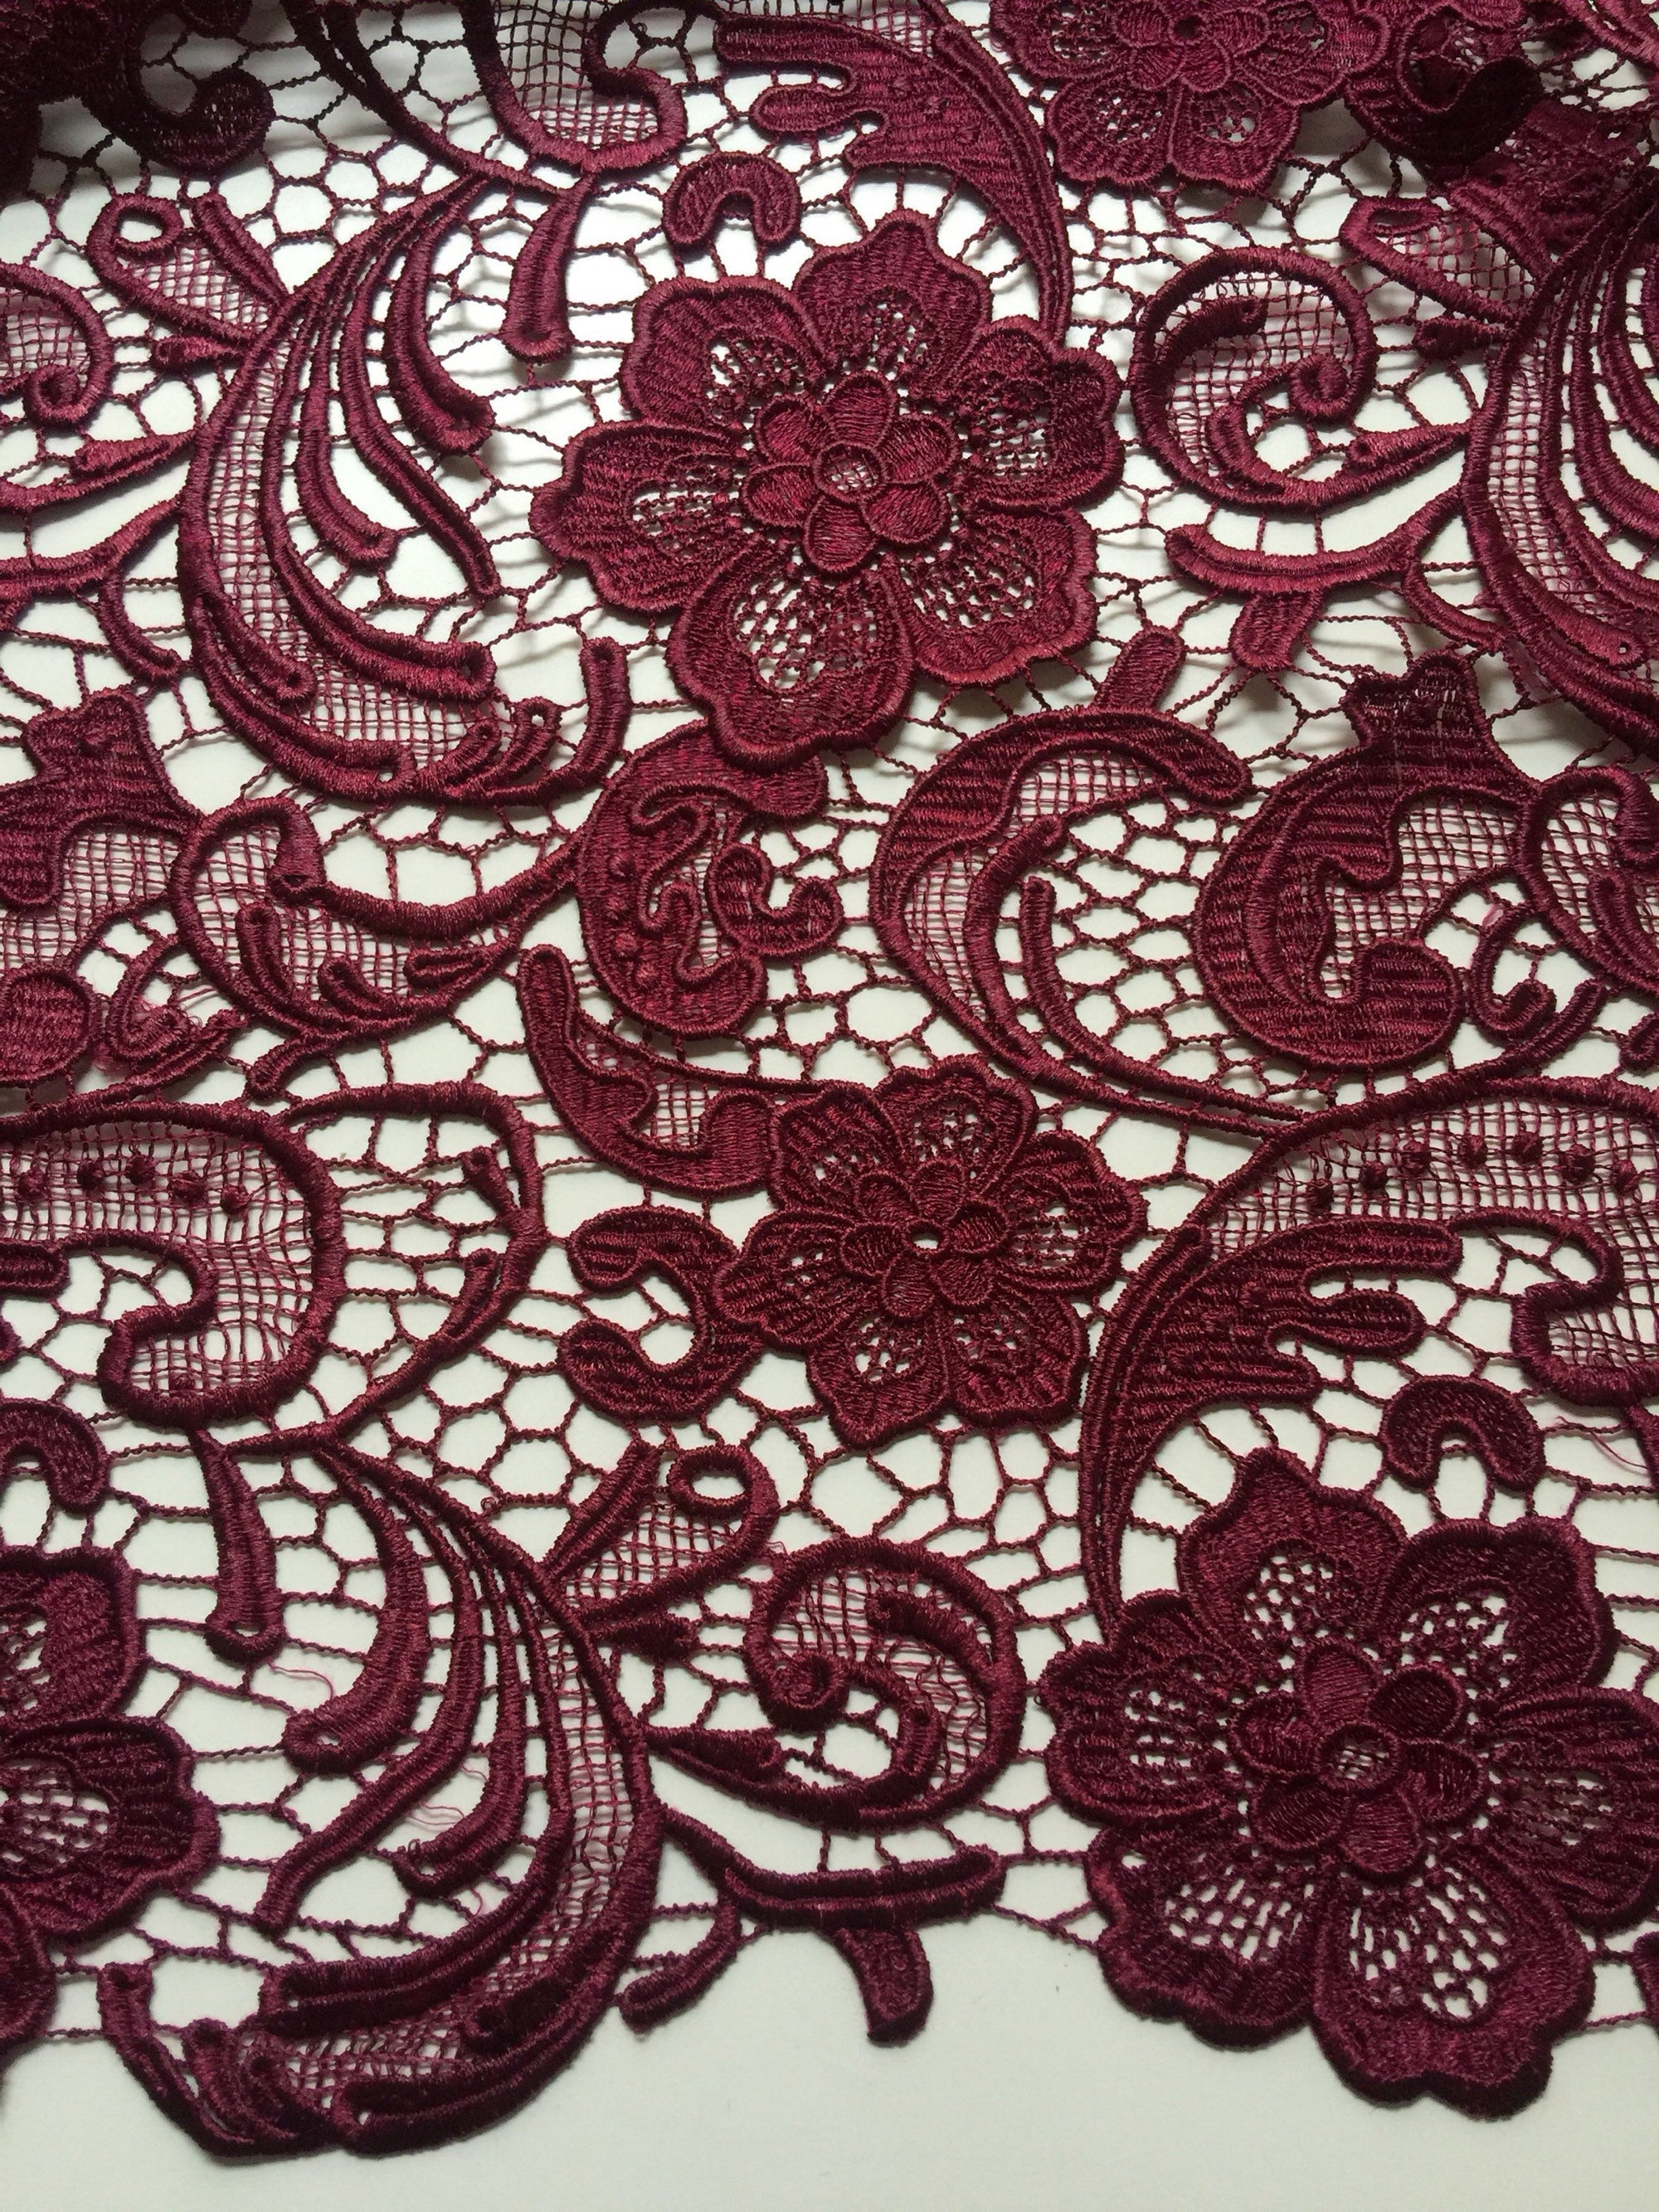 Burgundy Poly China Silk Lining Fabric - Bridal Fabric by the Yard